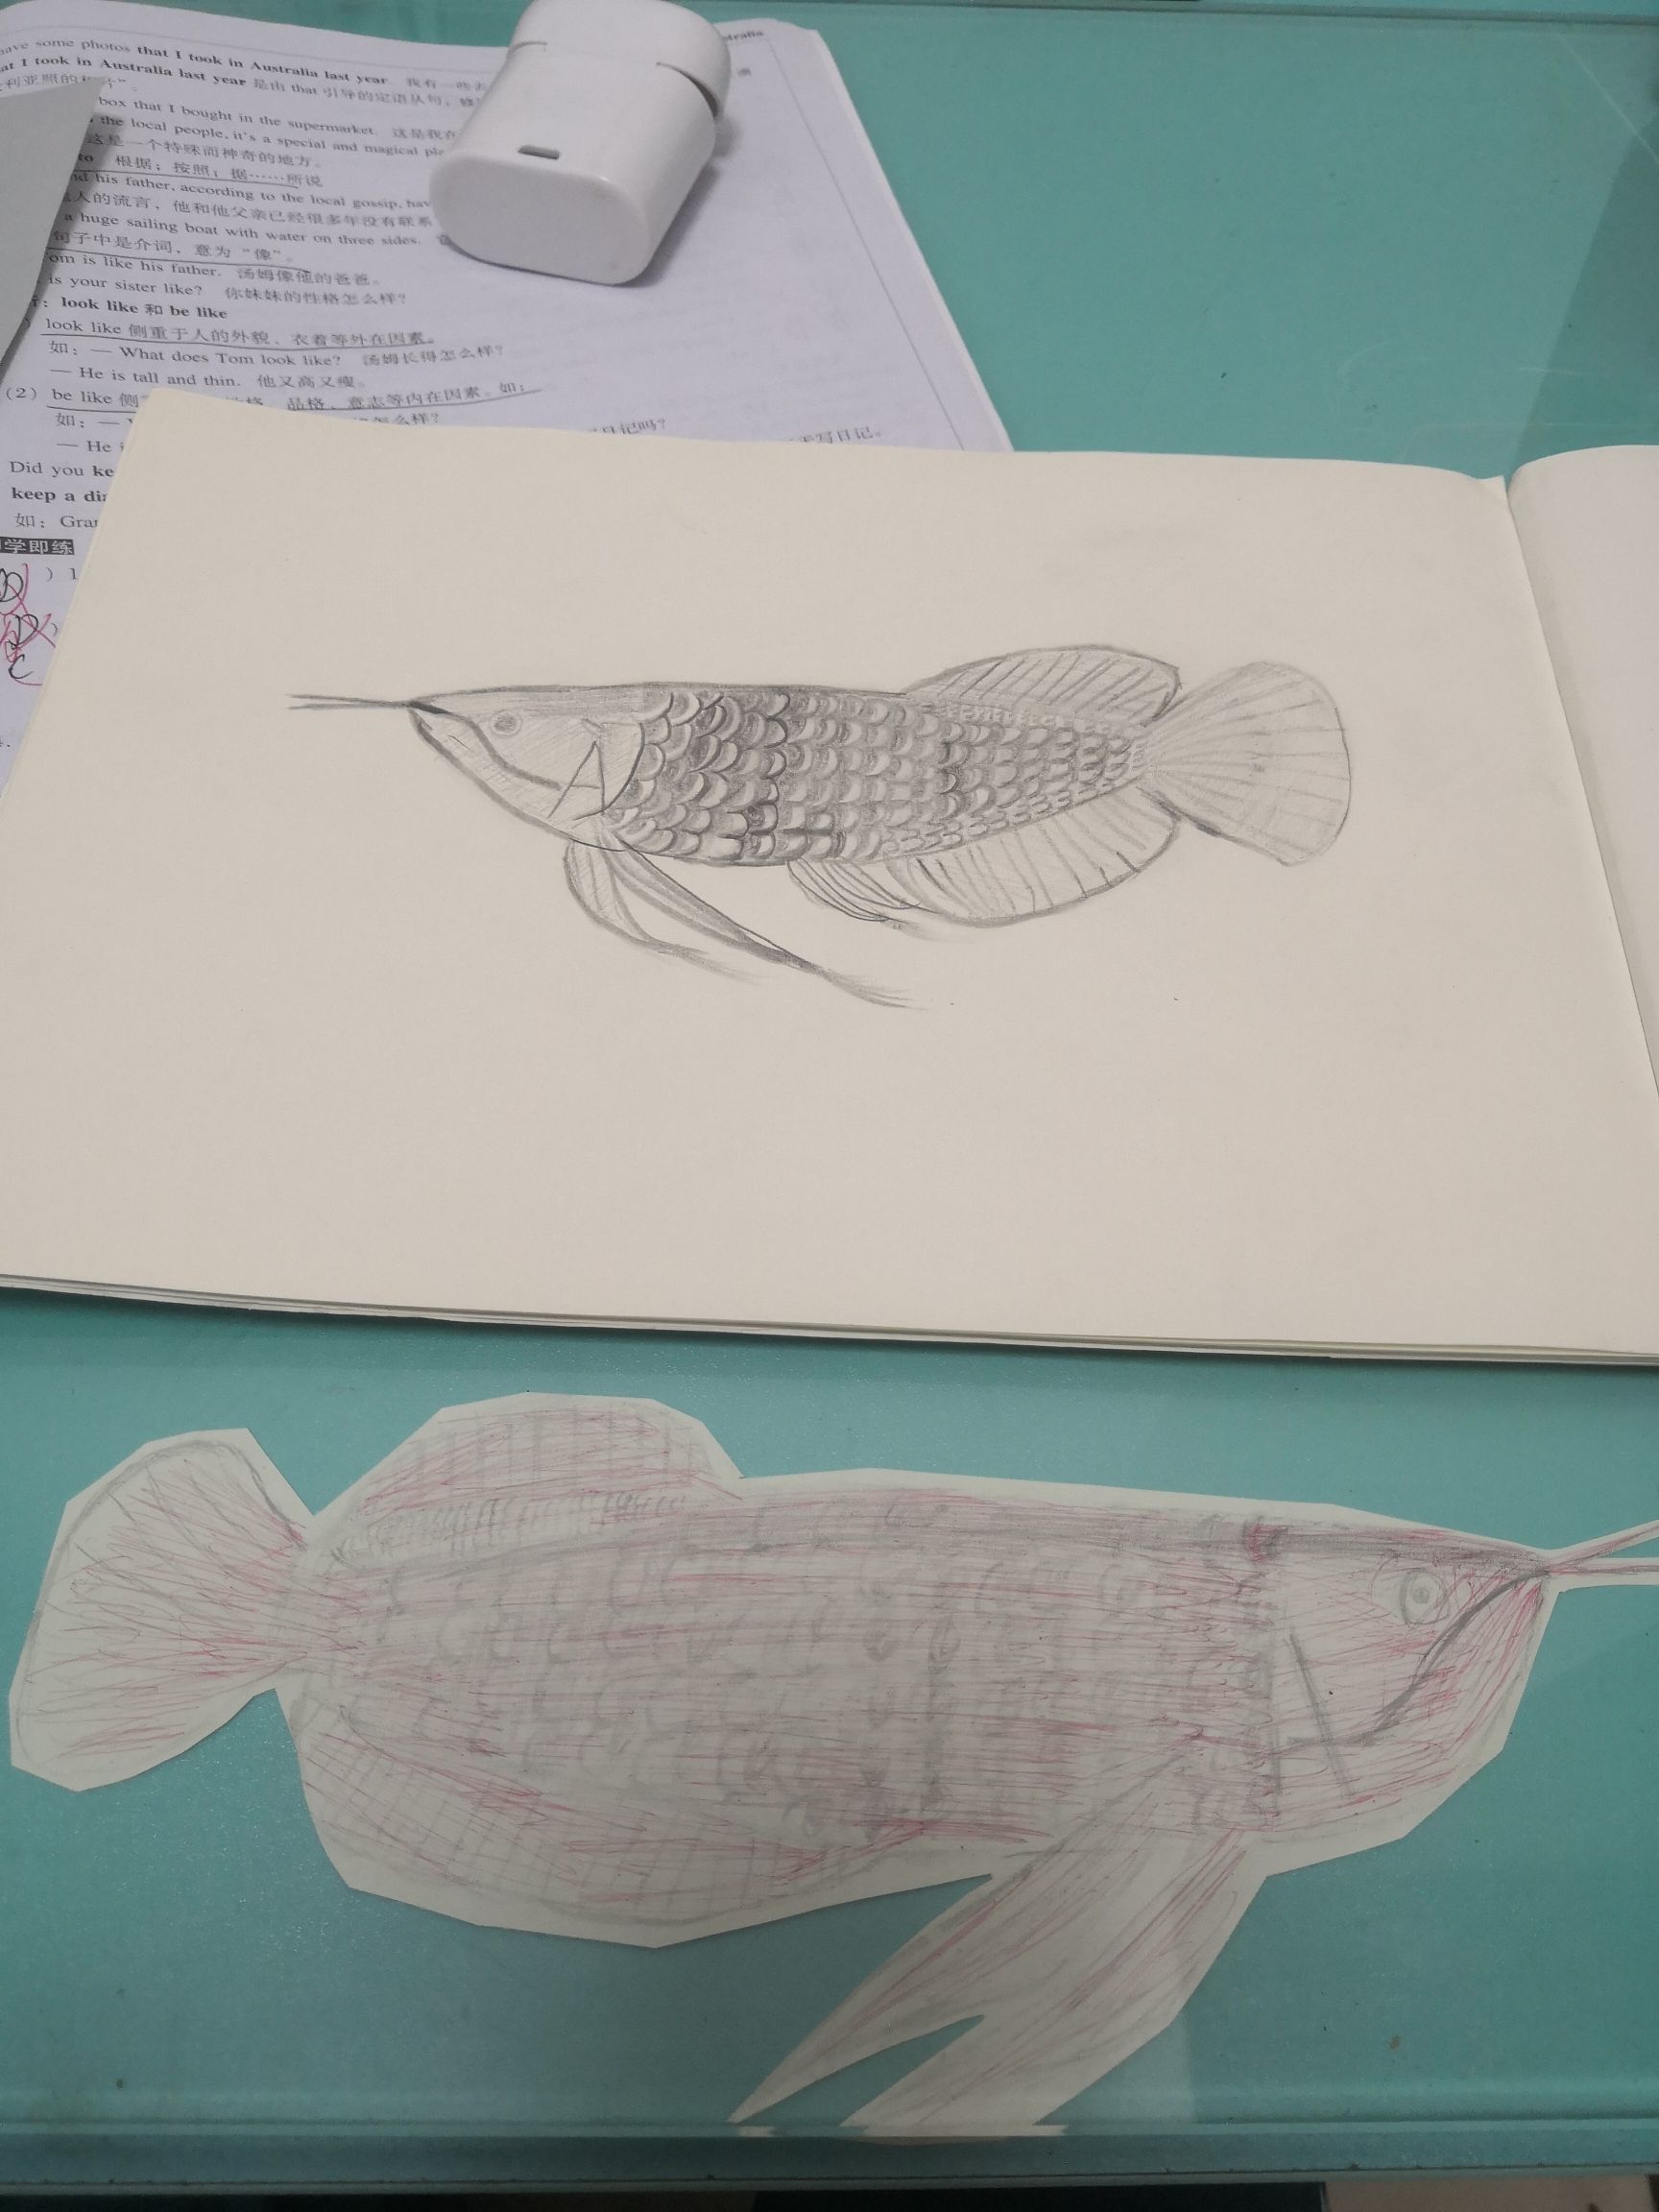 Bored fish in school self-study